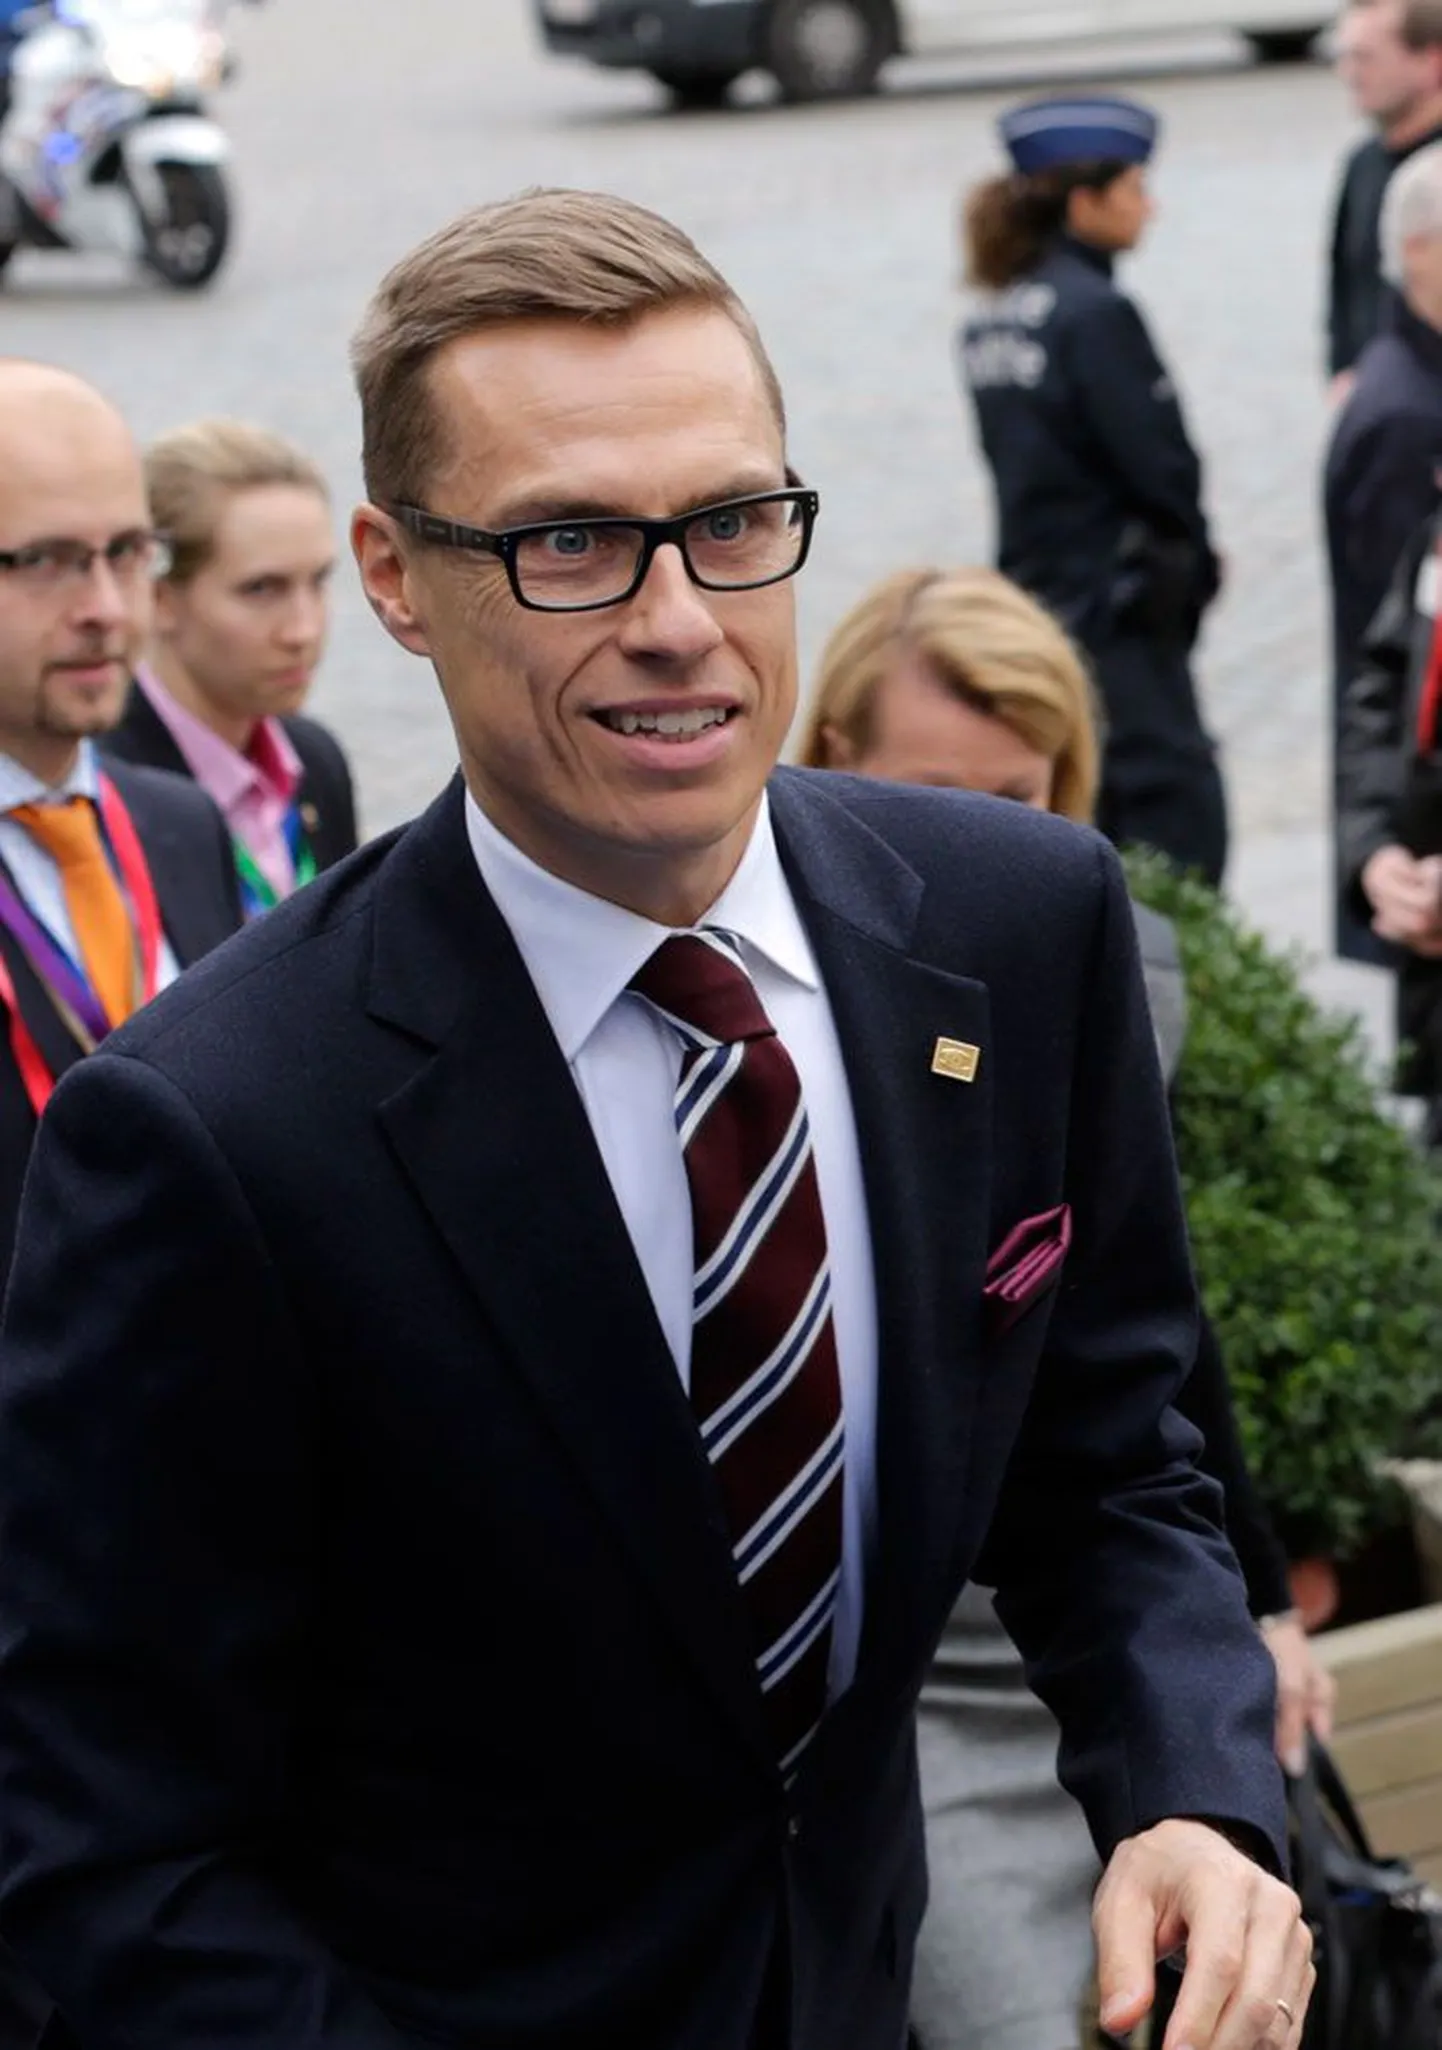 Soome rahandusminister Alexander Stubb